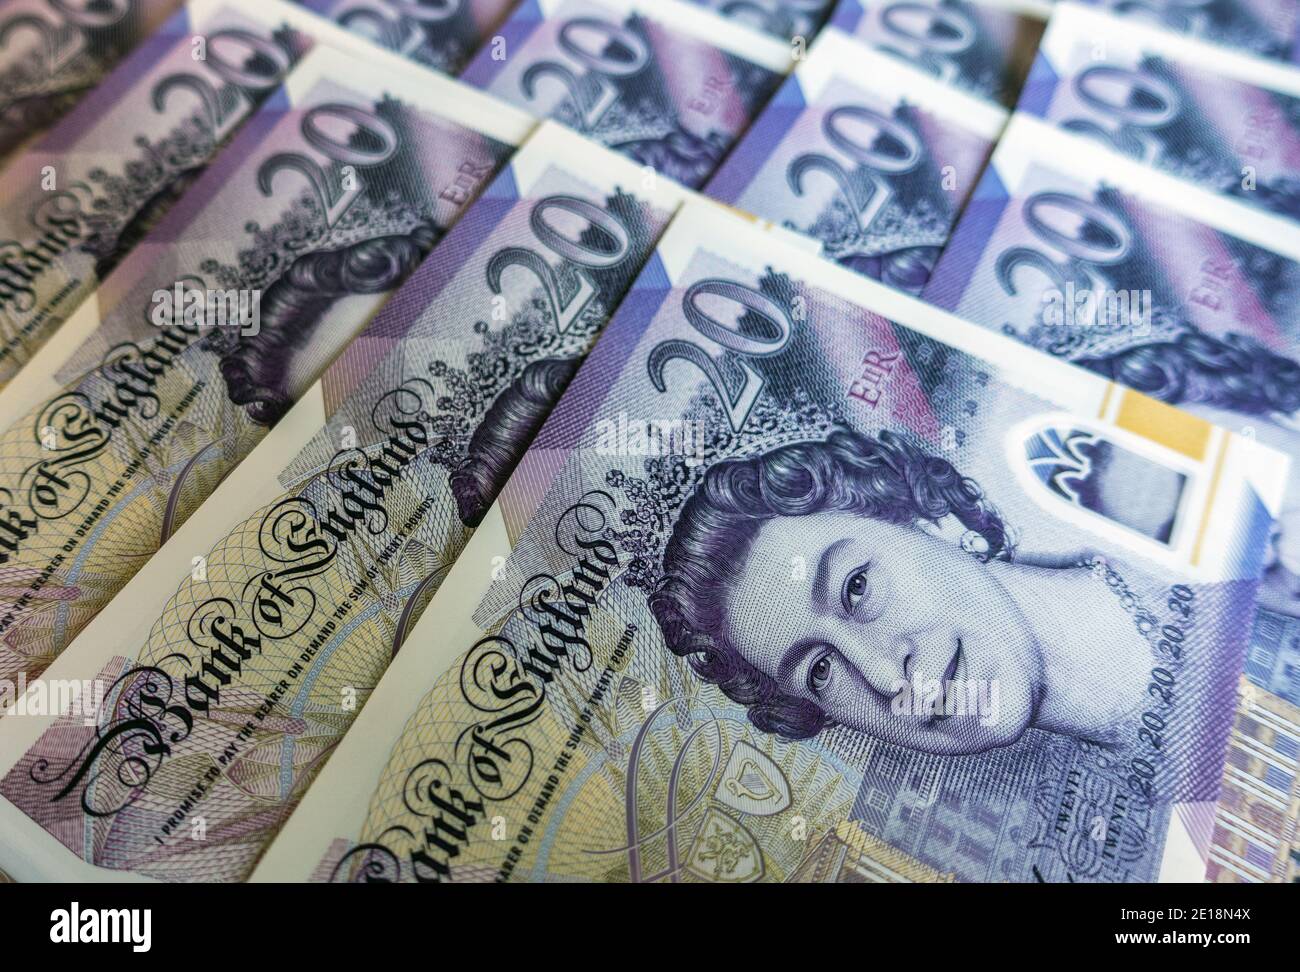 £20 bank notes Stock Photo